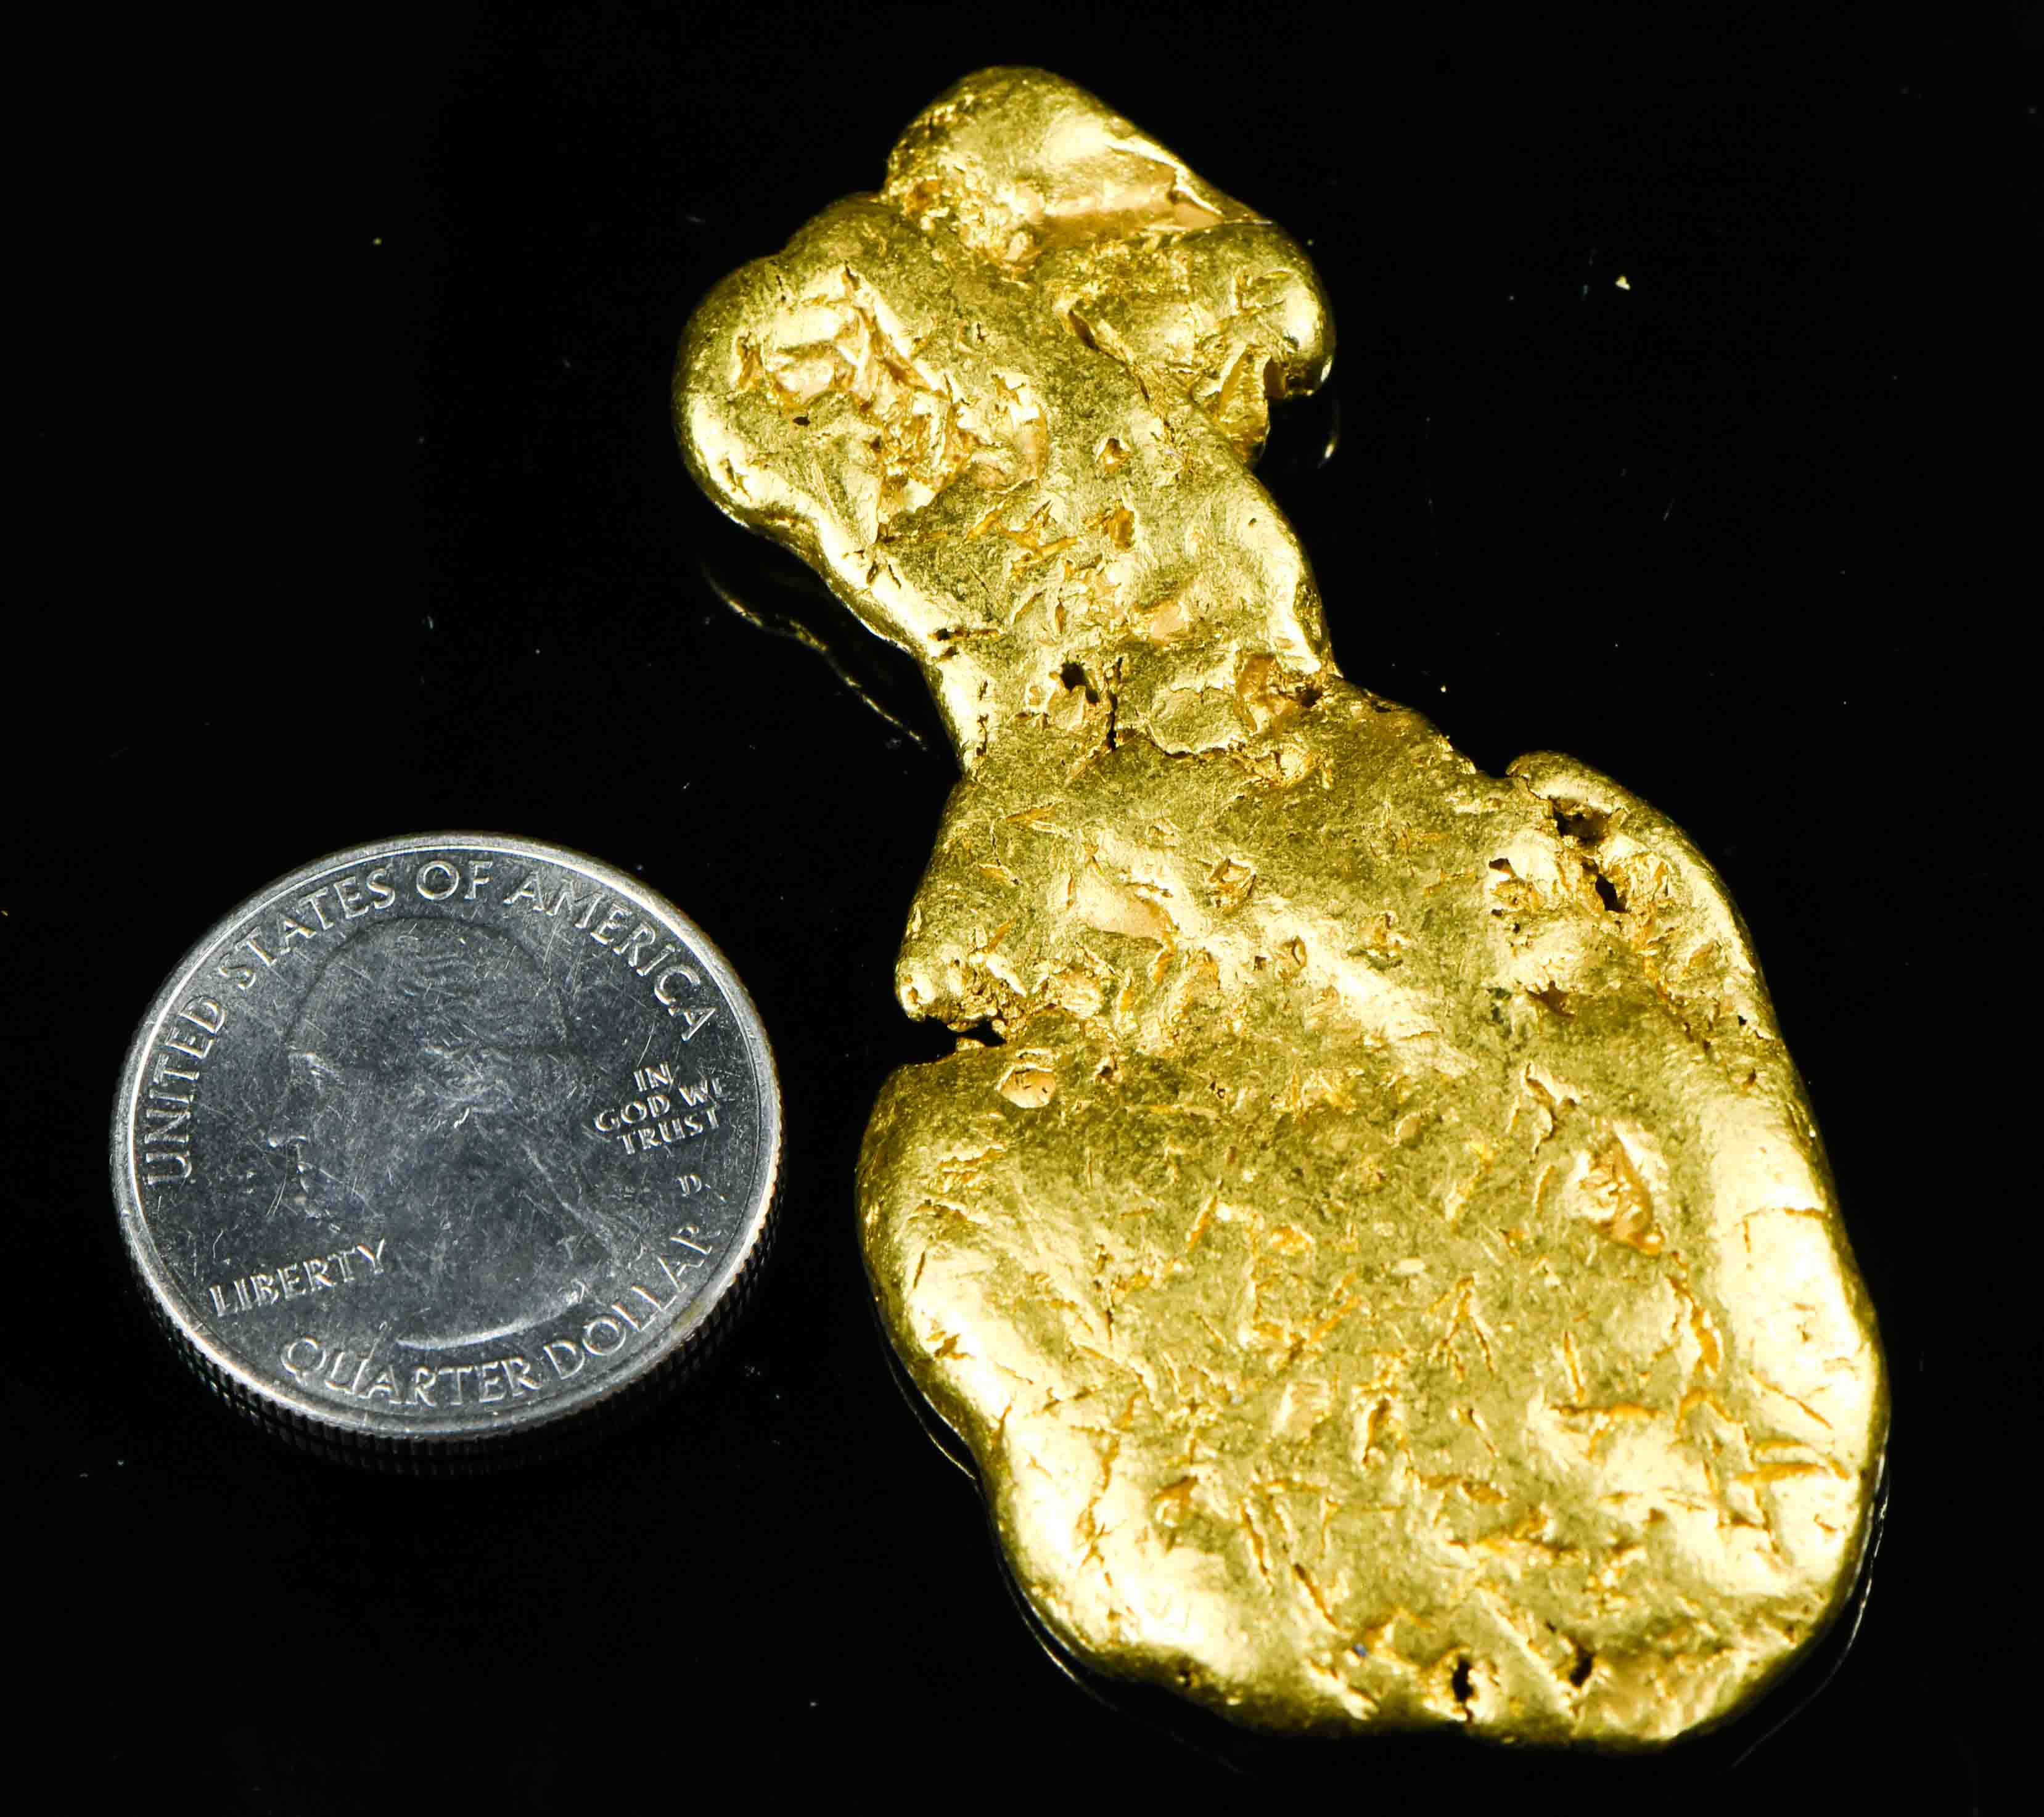 Large Silverado Gold Mine Alaskan Gold Nugget 90.14 Grams